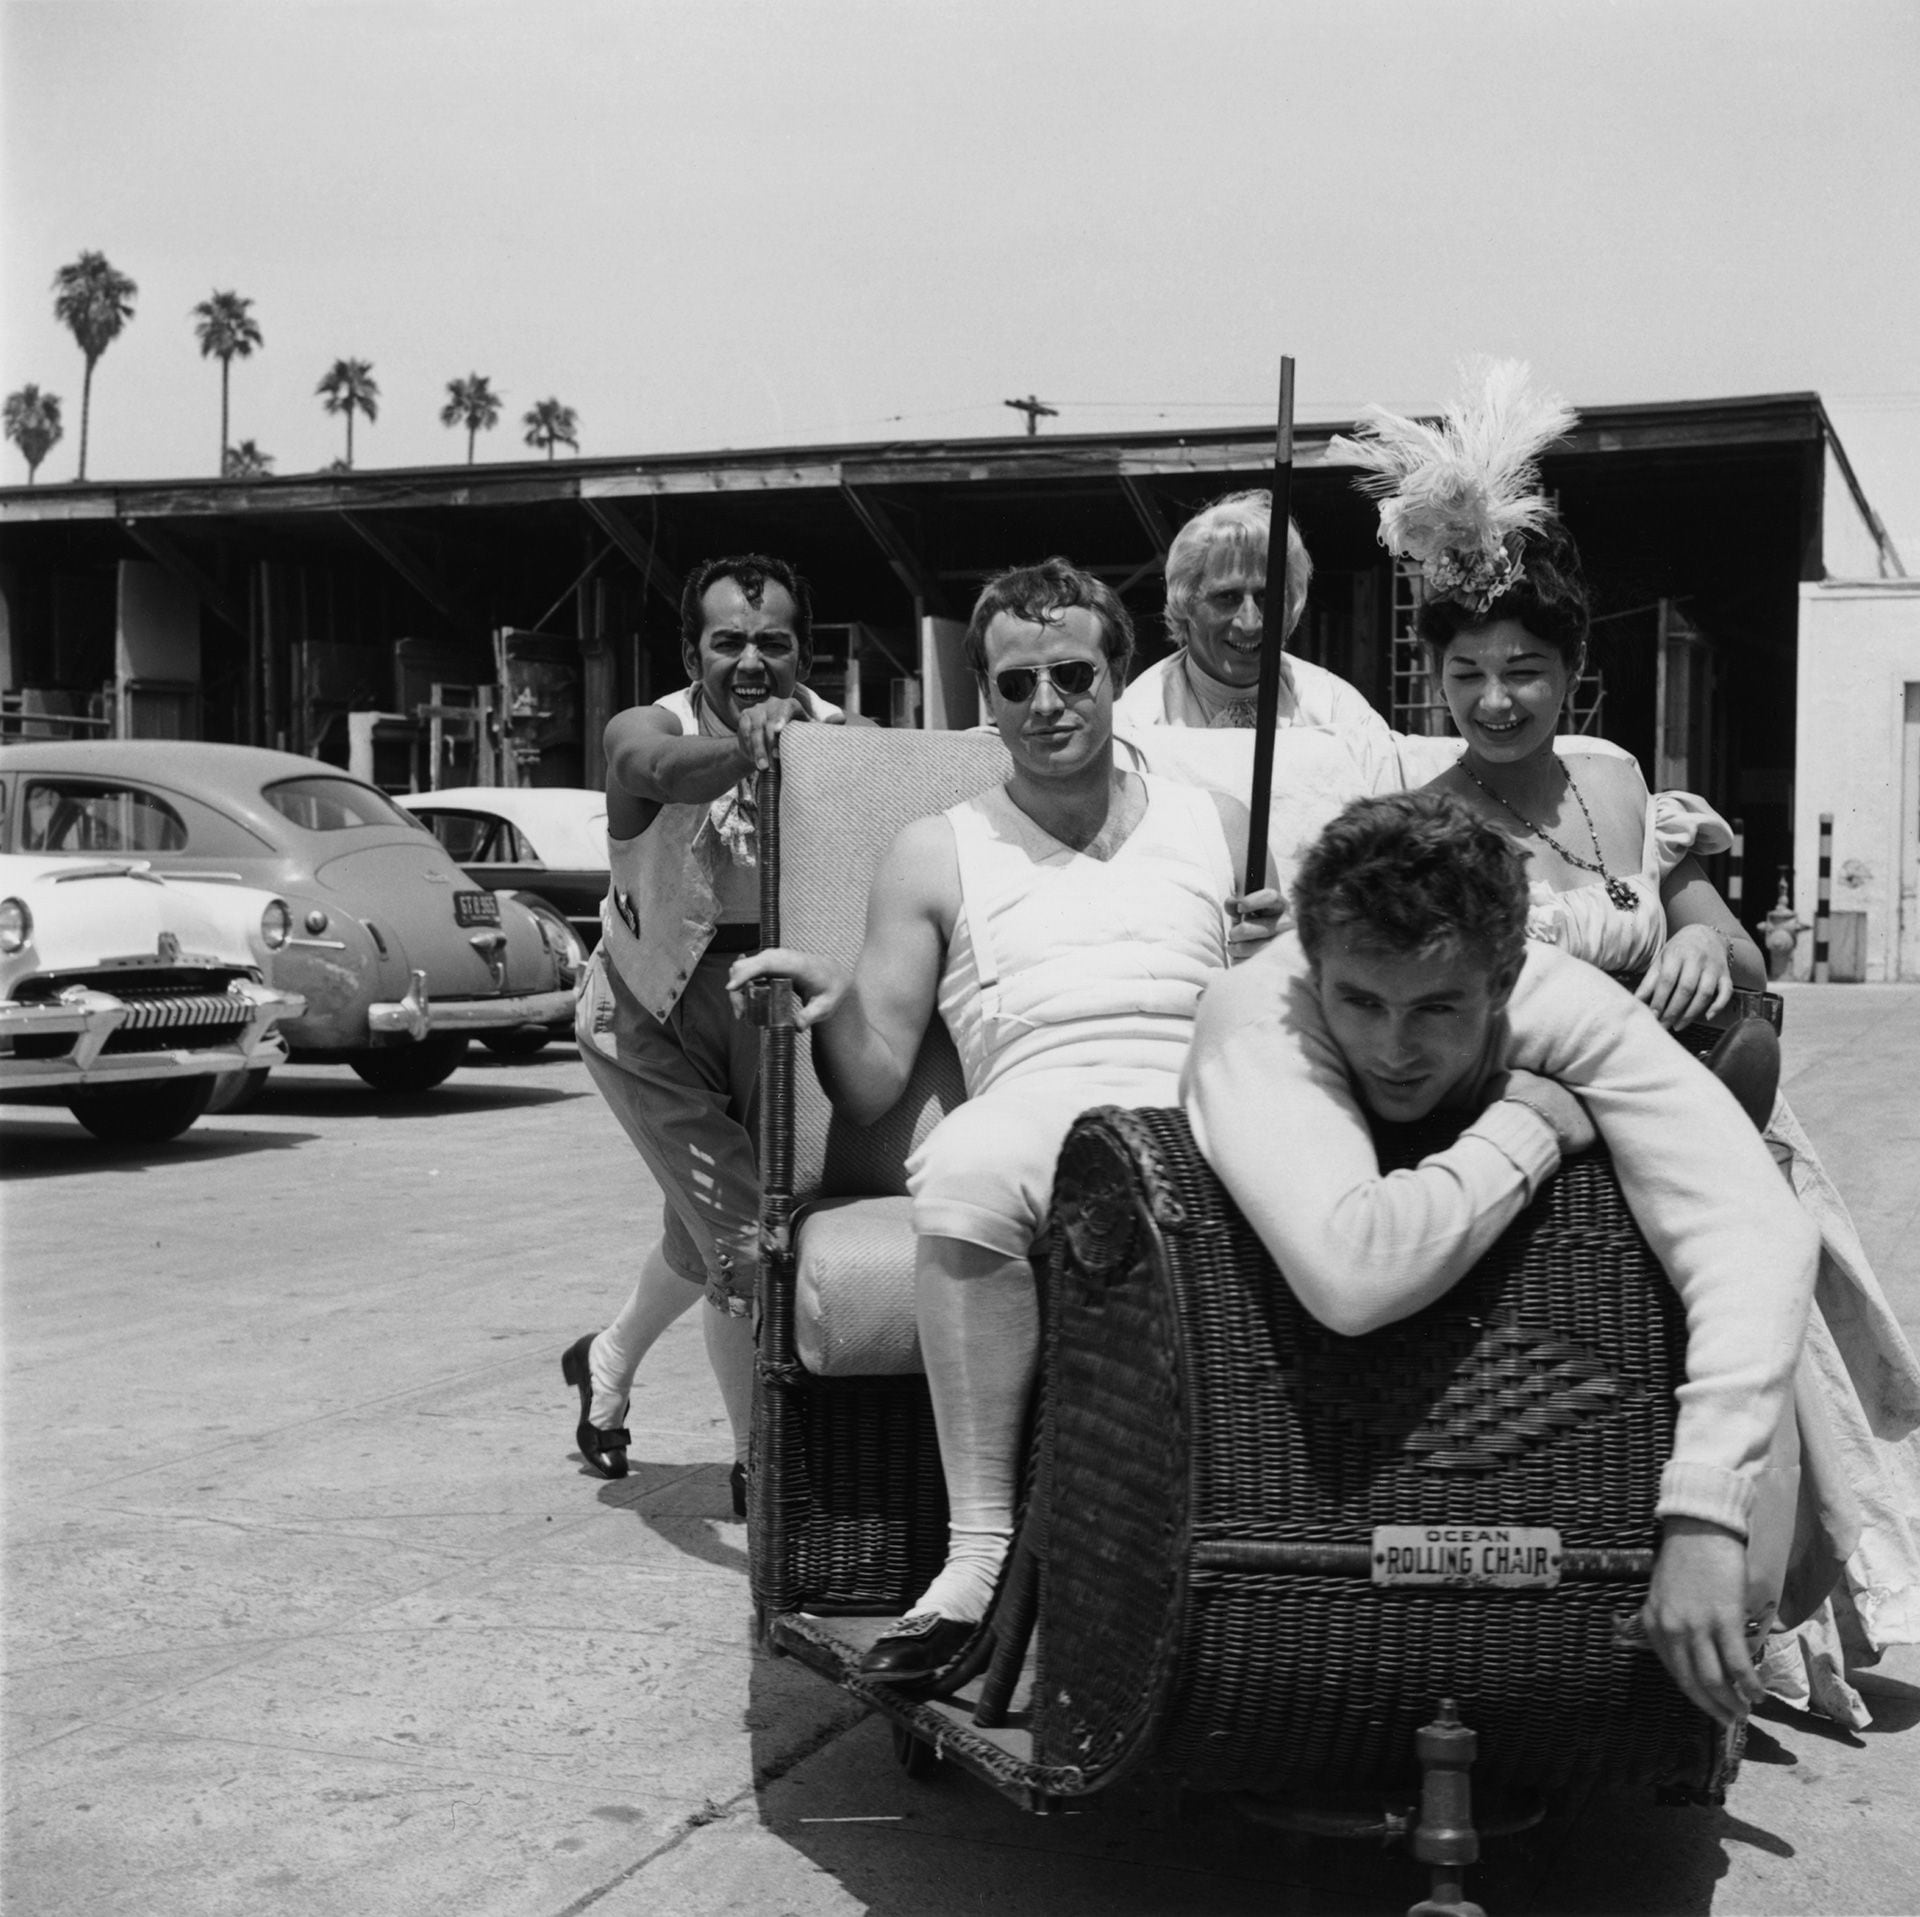 James Dean (1931 - 1955, foreground) and Marlon Brando